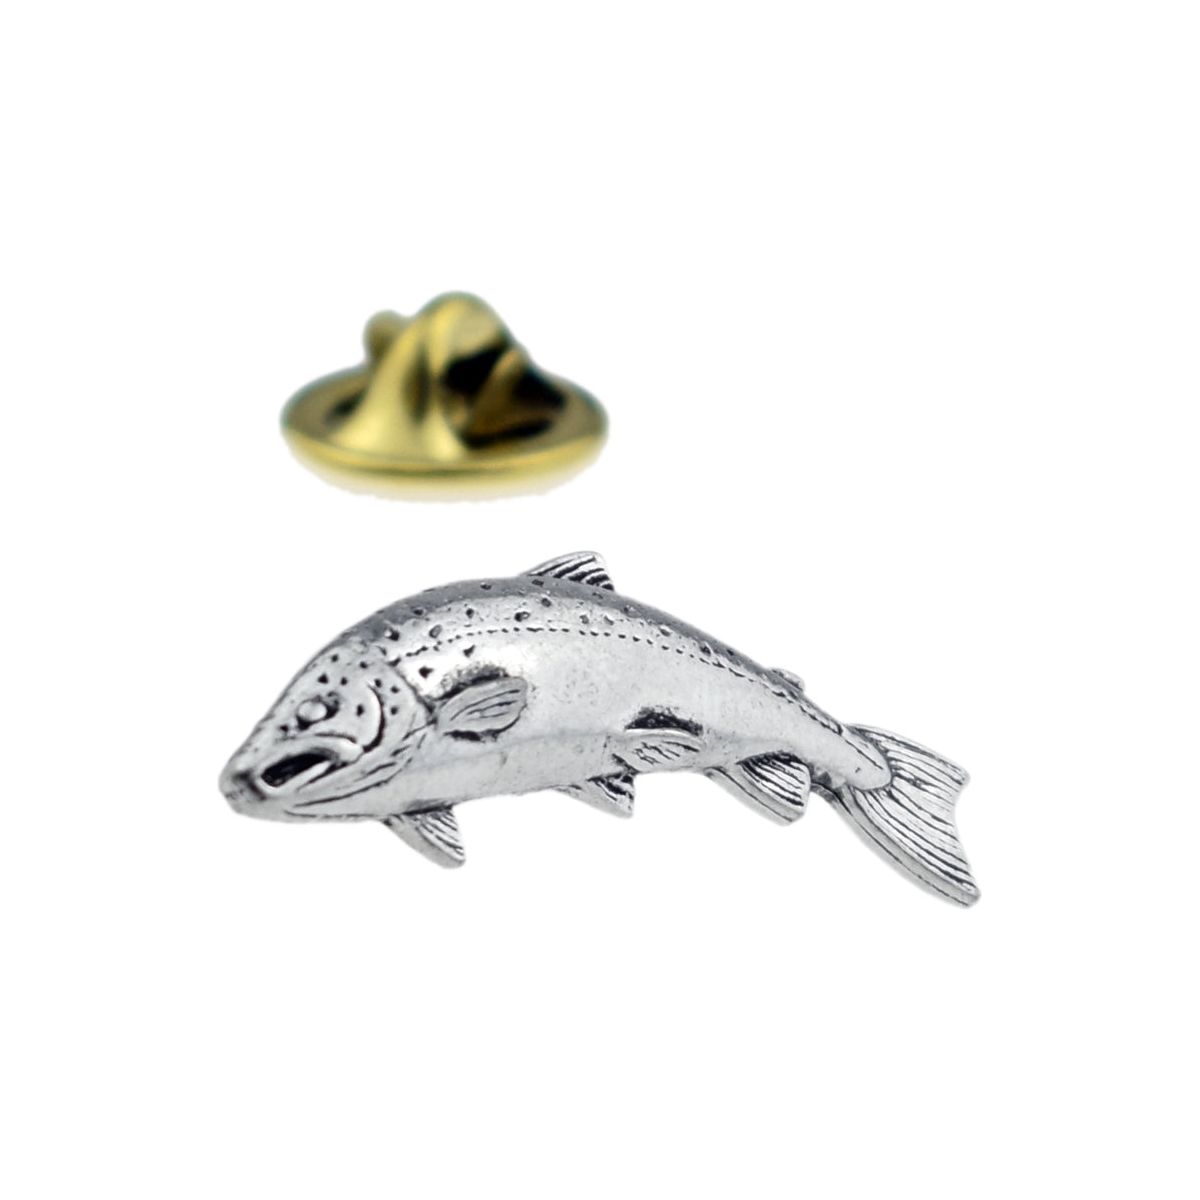 Small Salmon Fish Pewter Lapel Pin Badge - Ashton and Finch